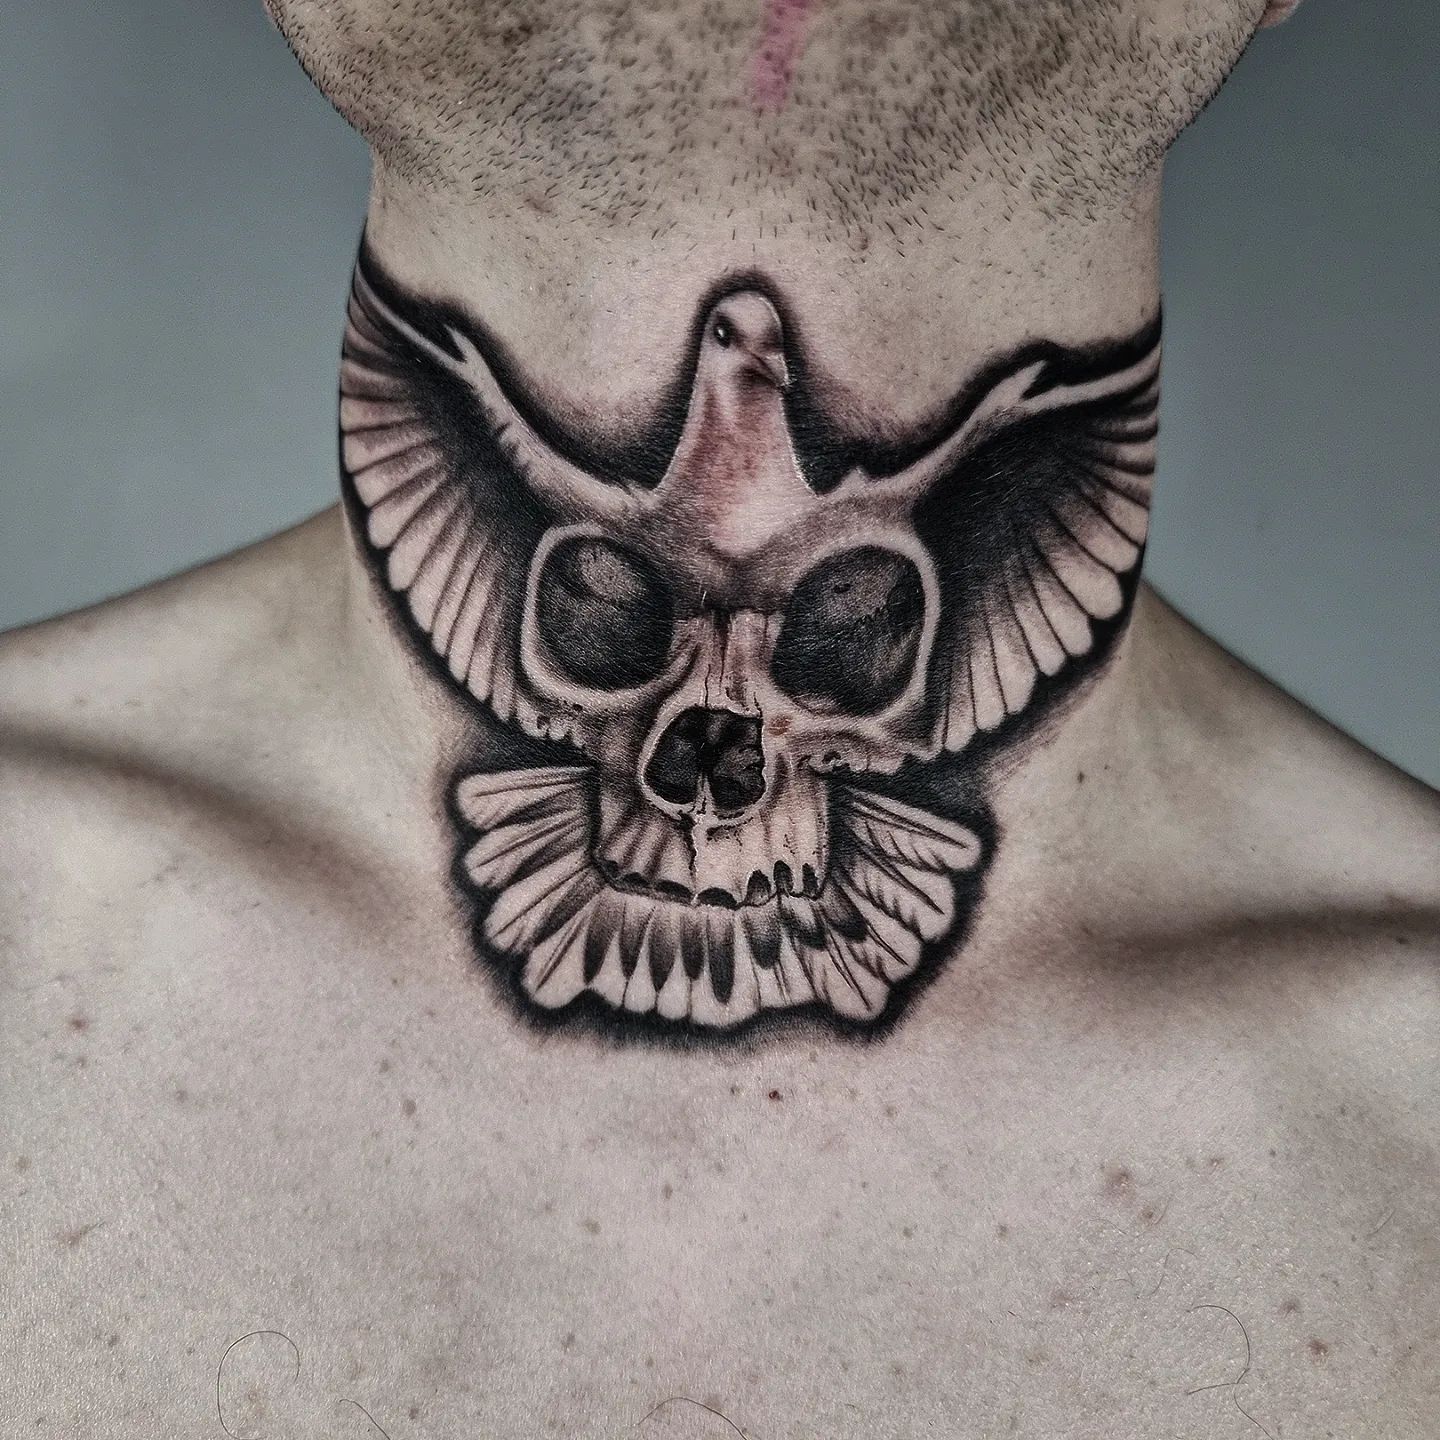 Tatuaje de paloma grande y negra.